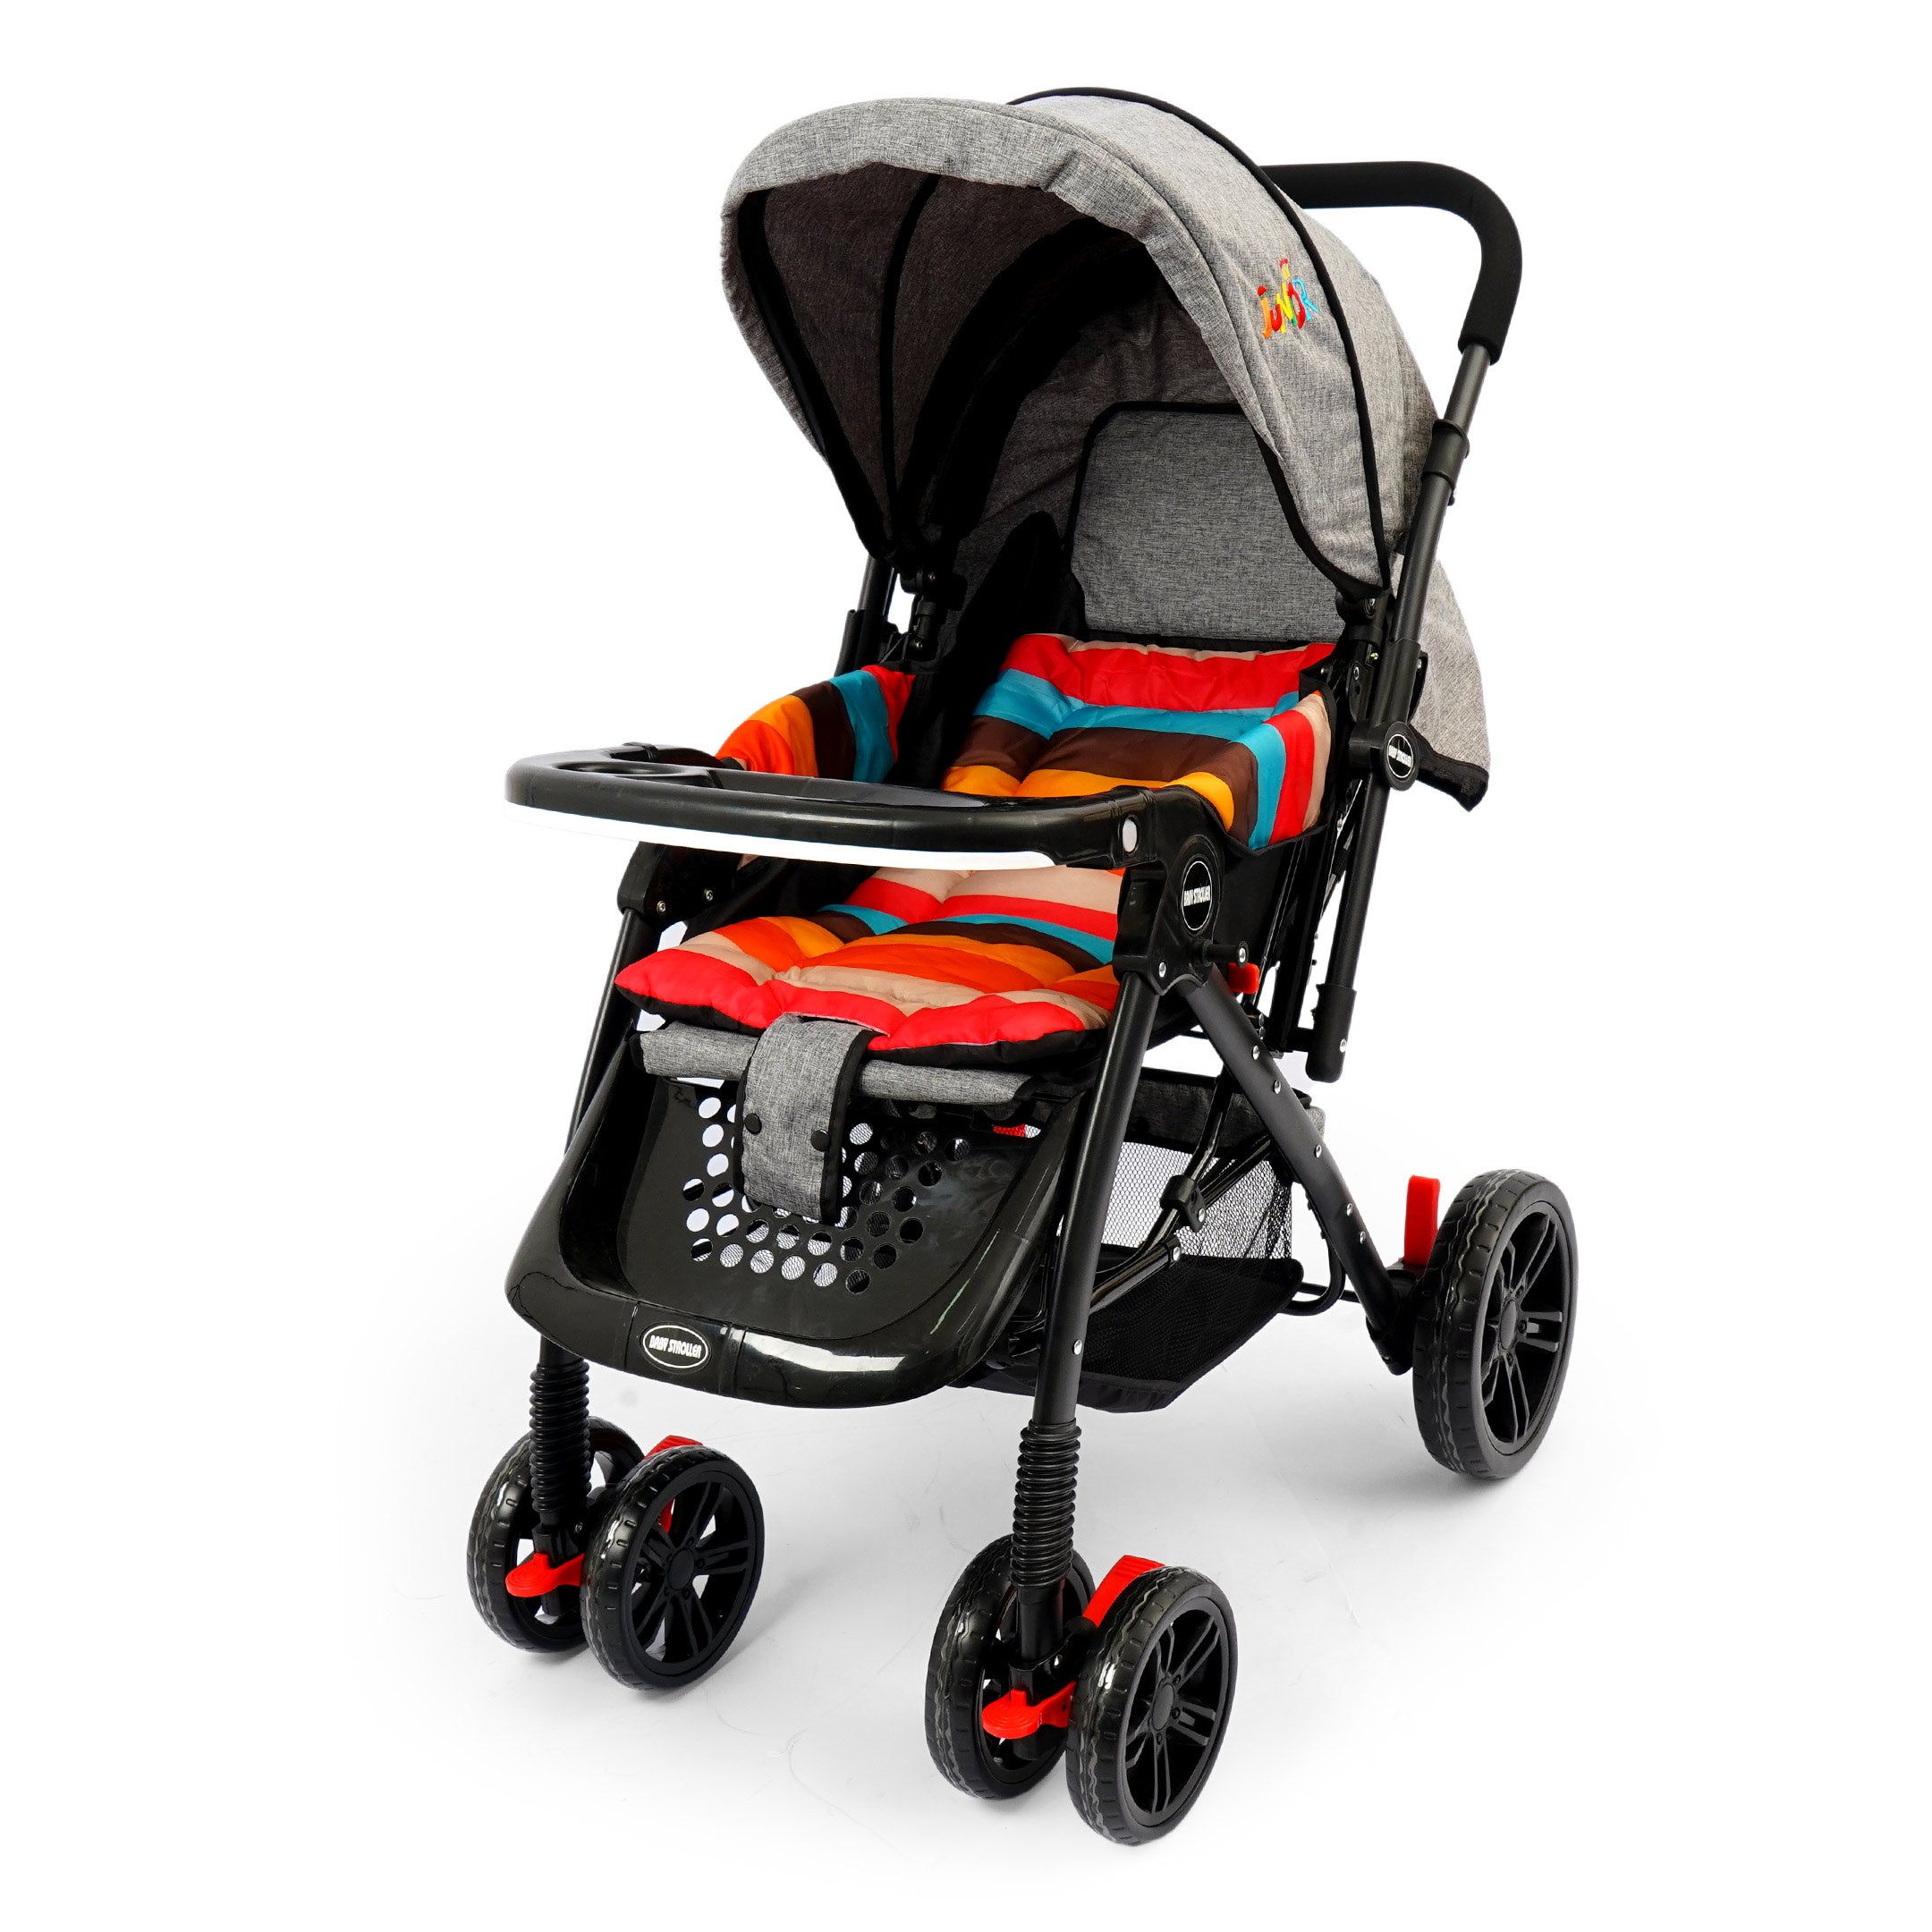 Junior Baby Stroller